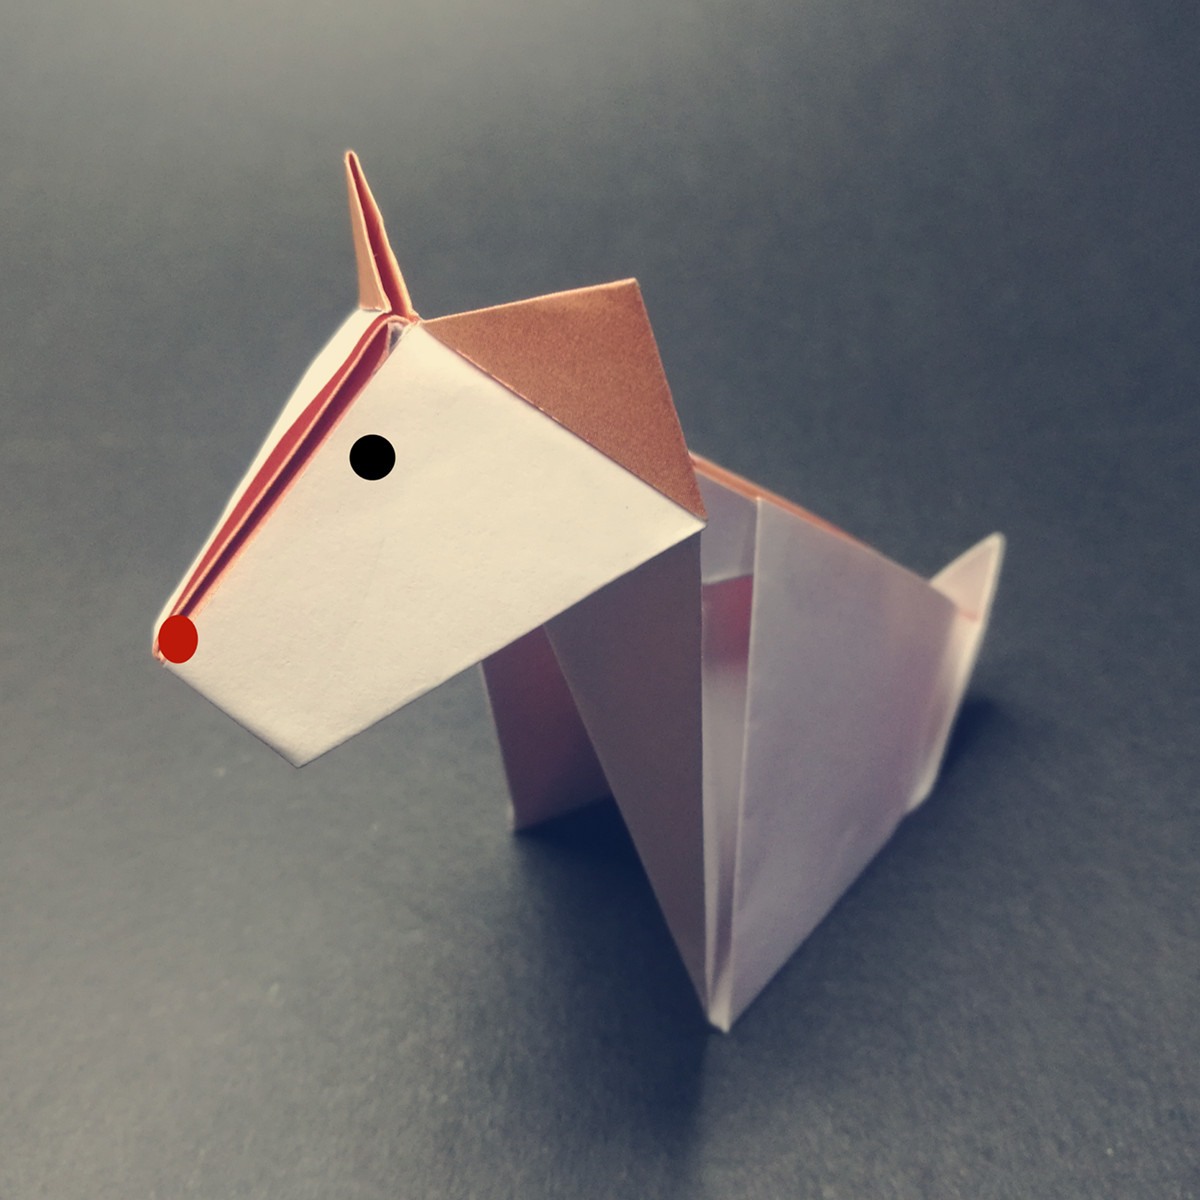 How To Make An Origami Dog Origami Dog Folding Instruction